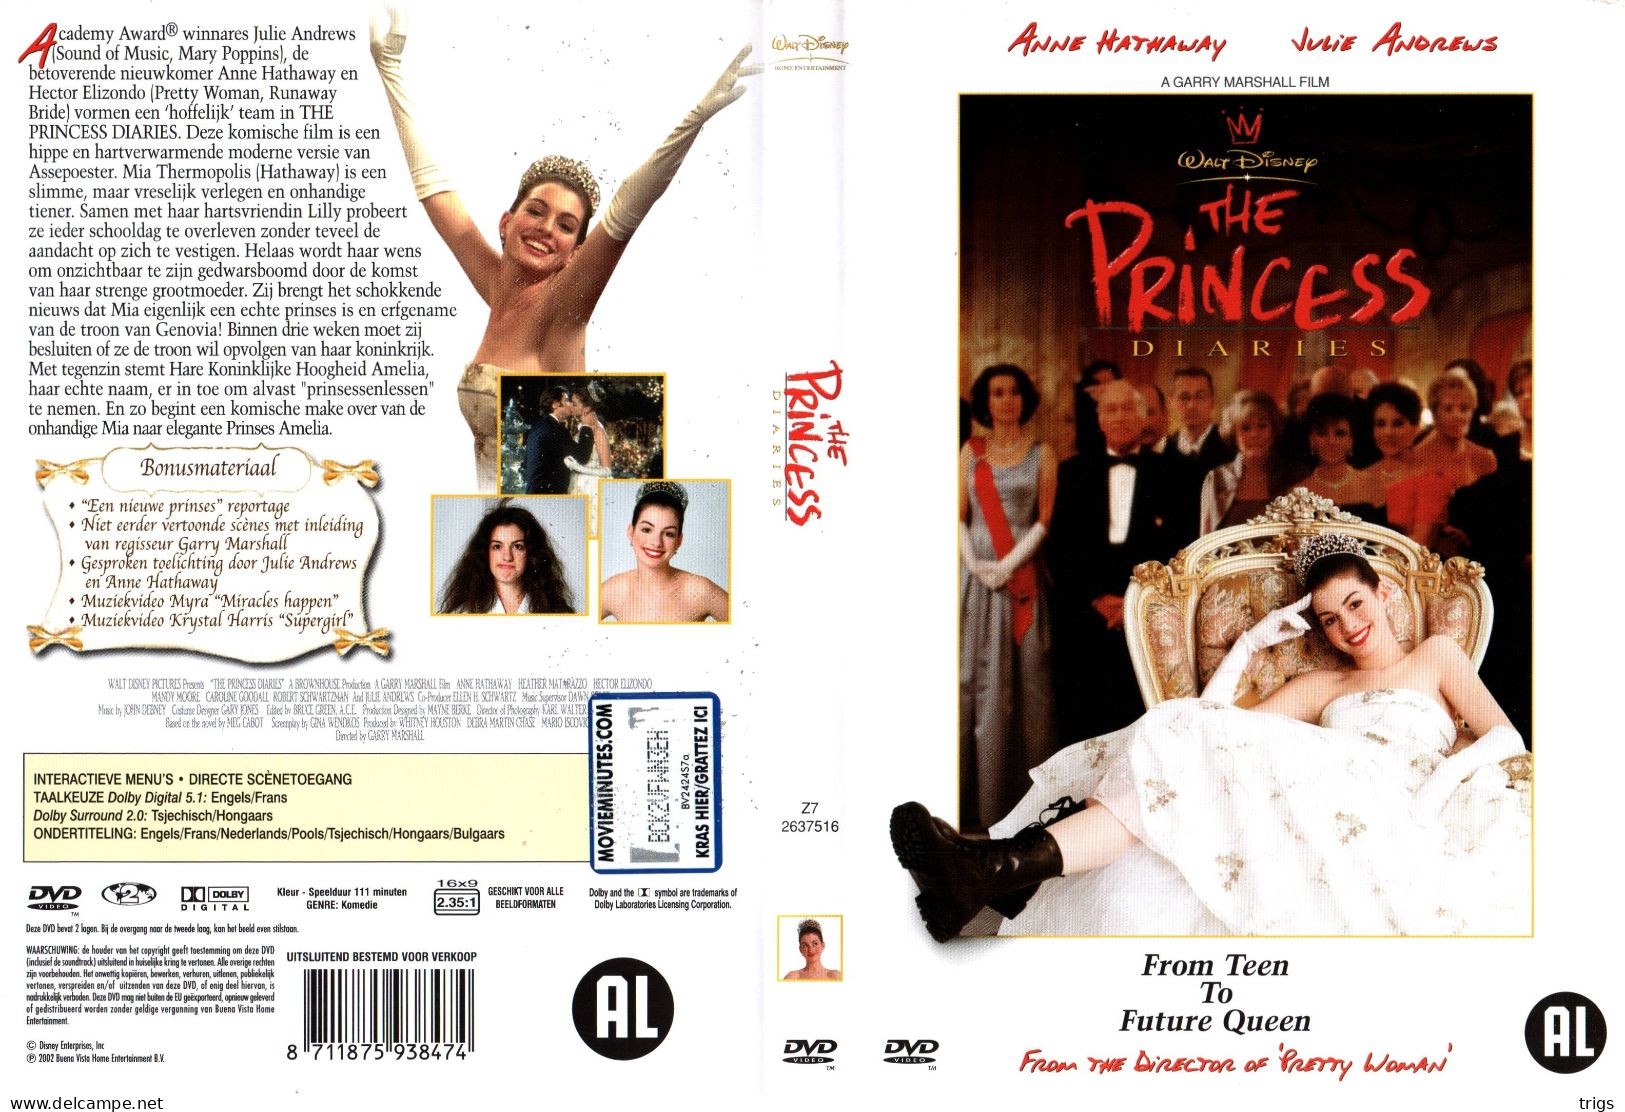 DVD - The Princess Diaries - Commedia